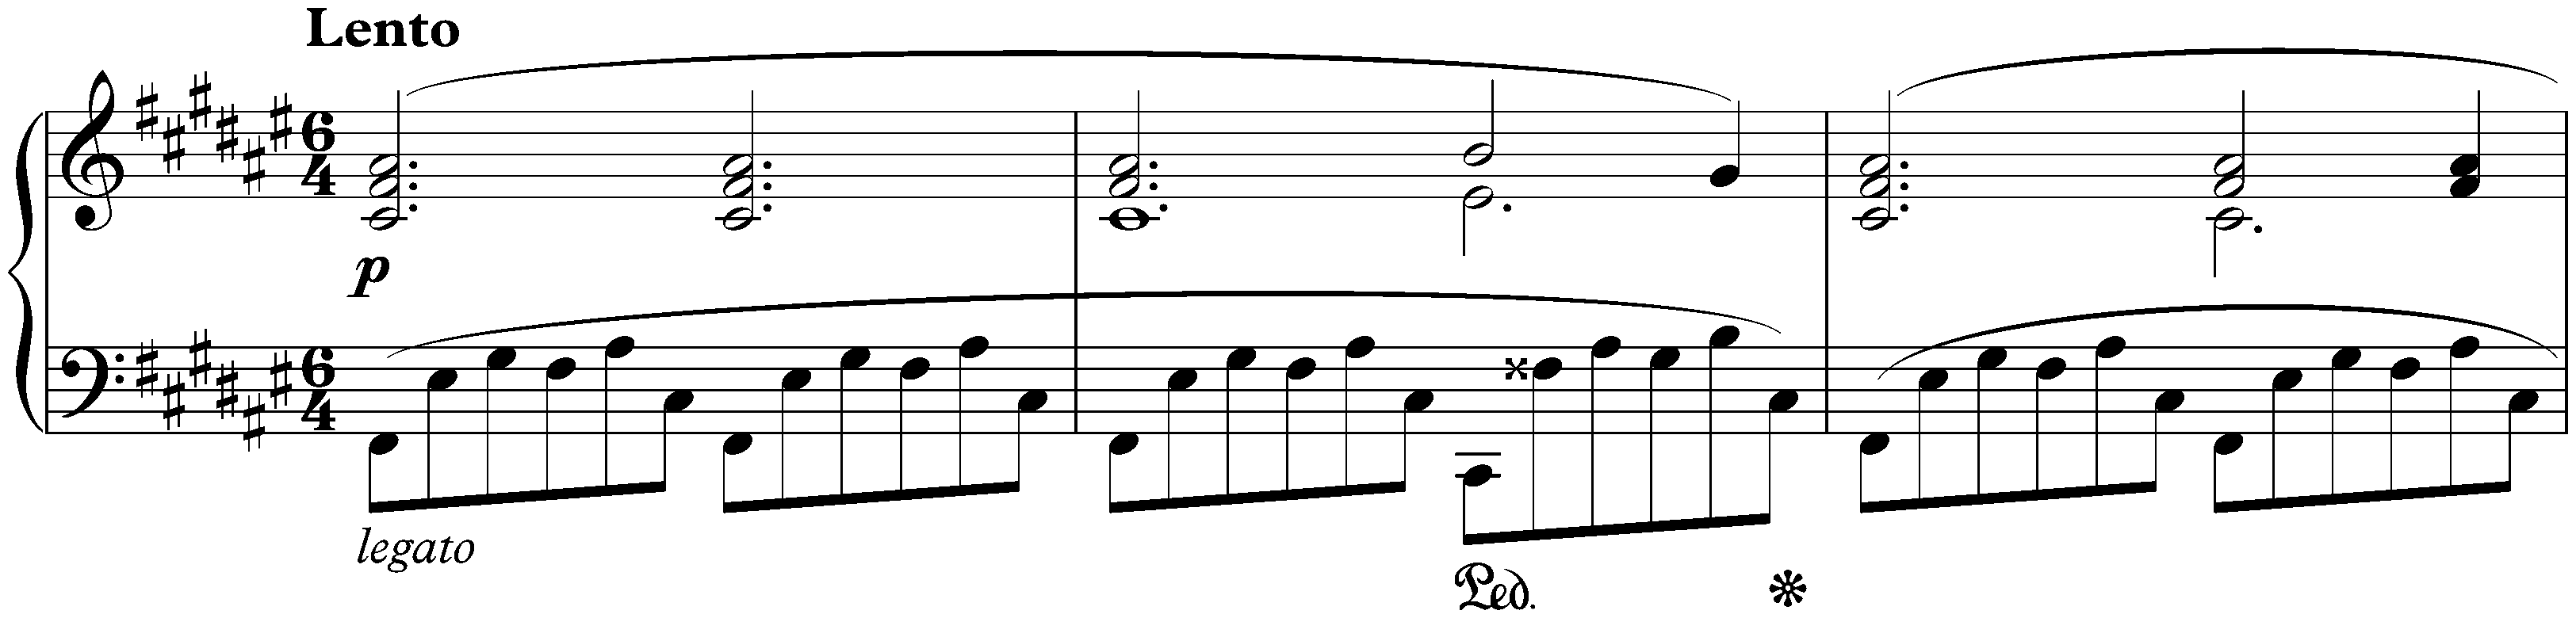 Twenty-four Préludes, op. 28; 13. F-sharp major